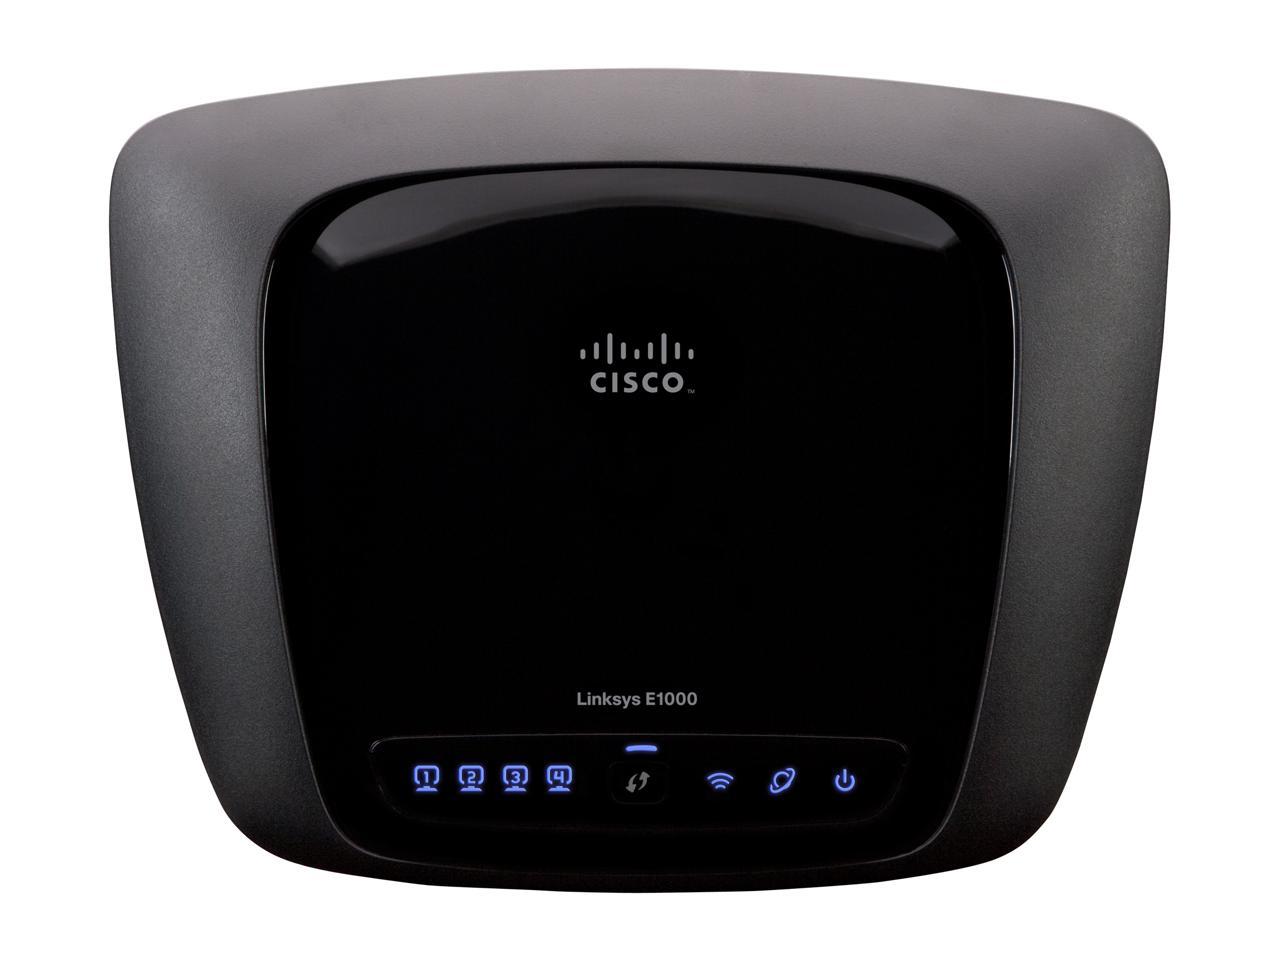 Cisco-Linksys E1000 Wireless B/G/N Router 4 LAN ports 